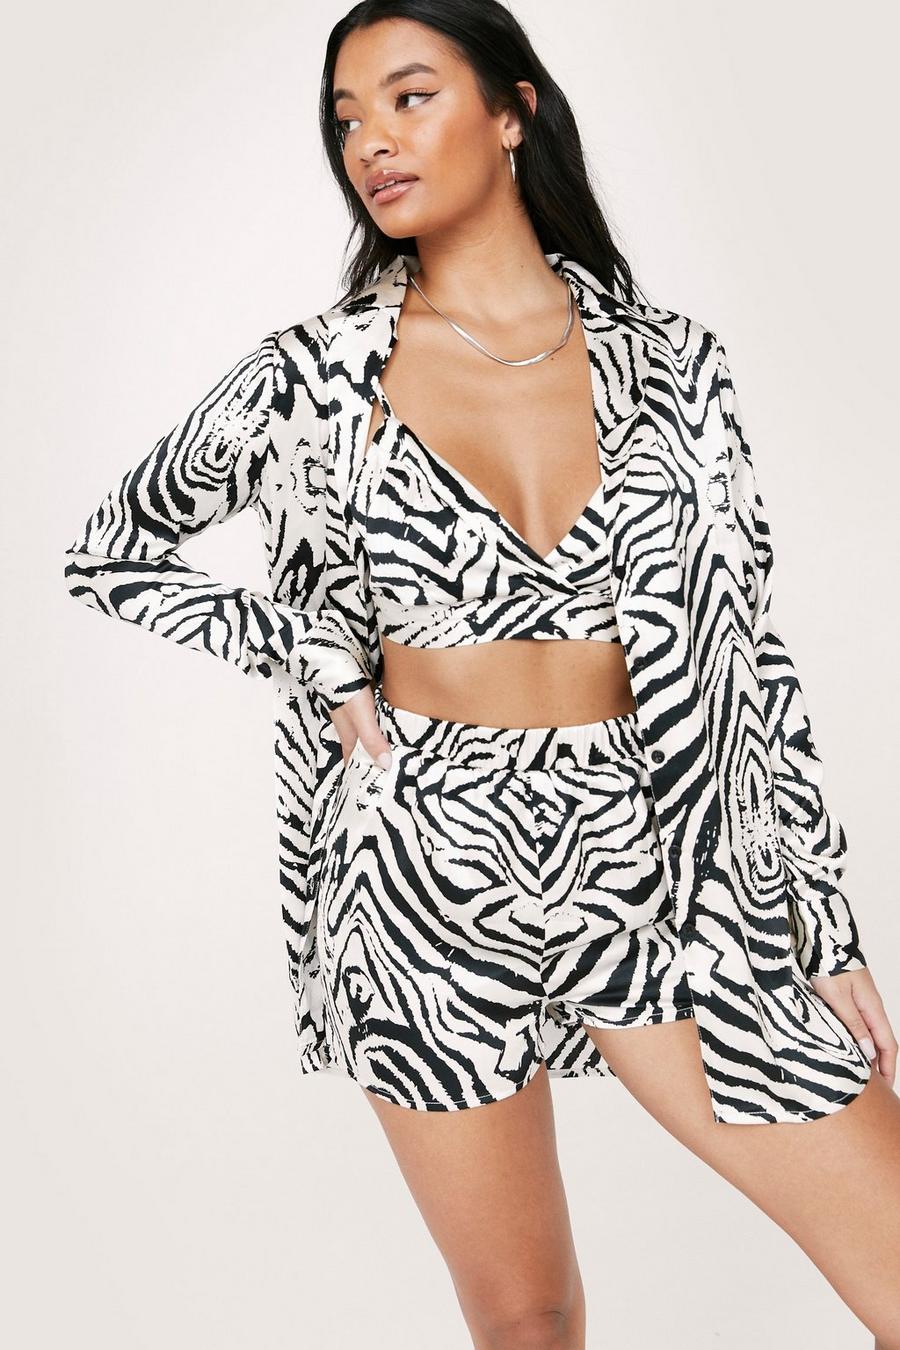 Satin Zebra Bralette Short Shirt 3 Pc Pyjama Set